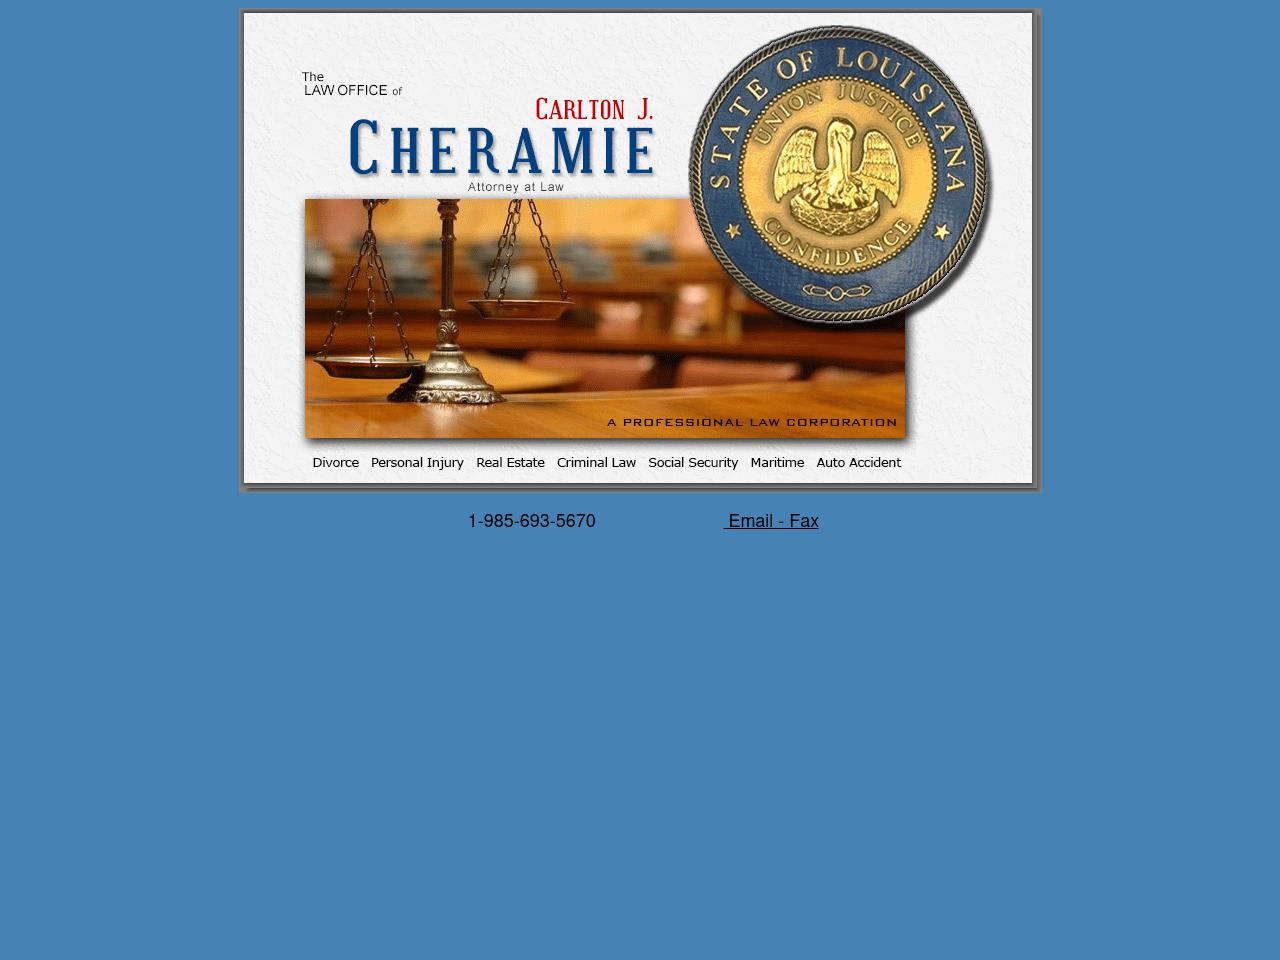 Cheramie & Stentz, APLC - Cut Off LA Lawyers